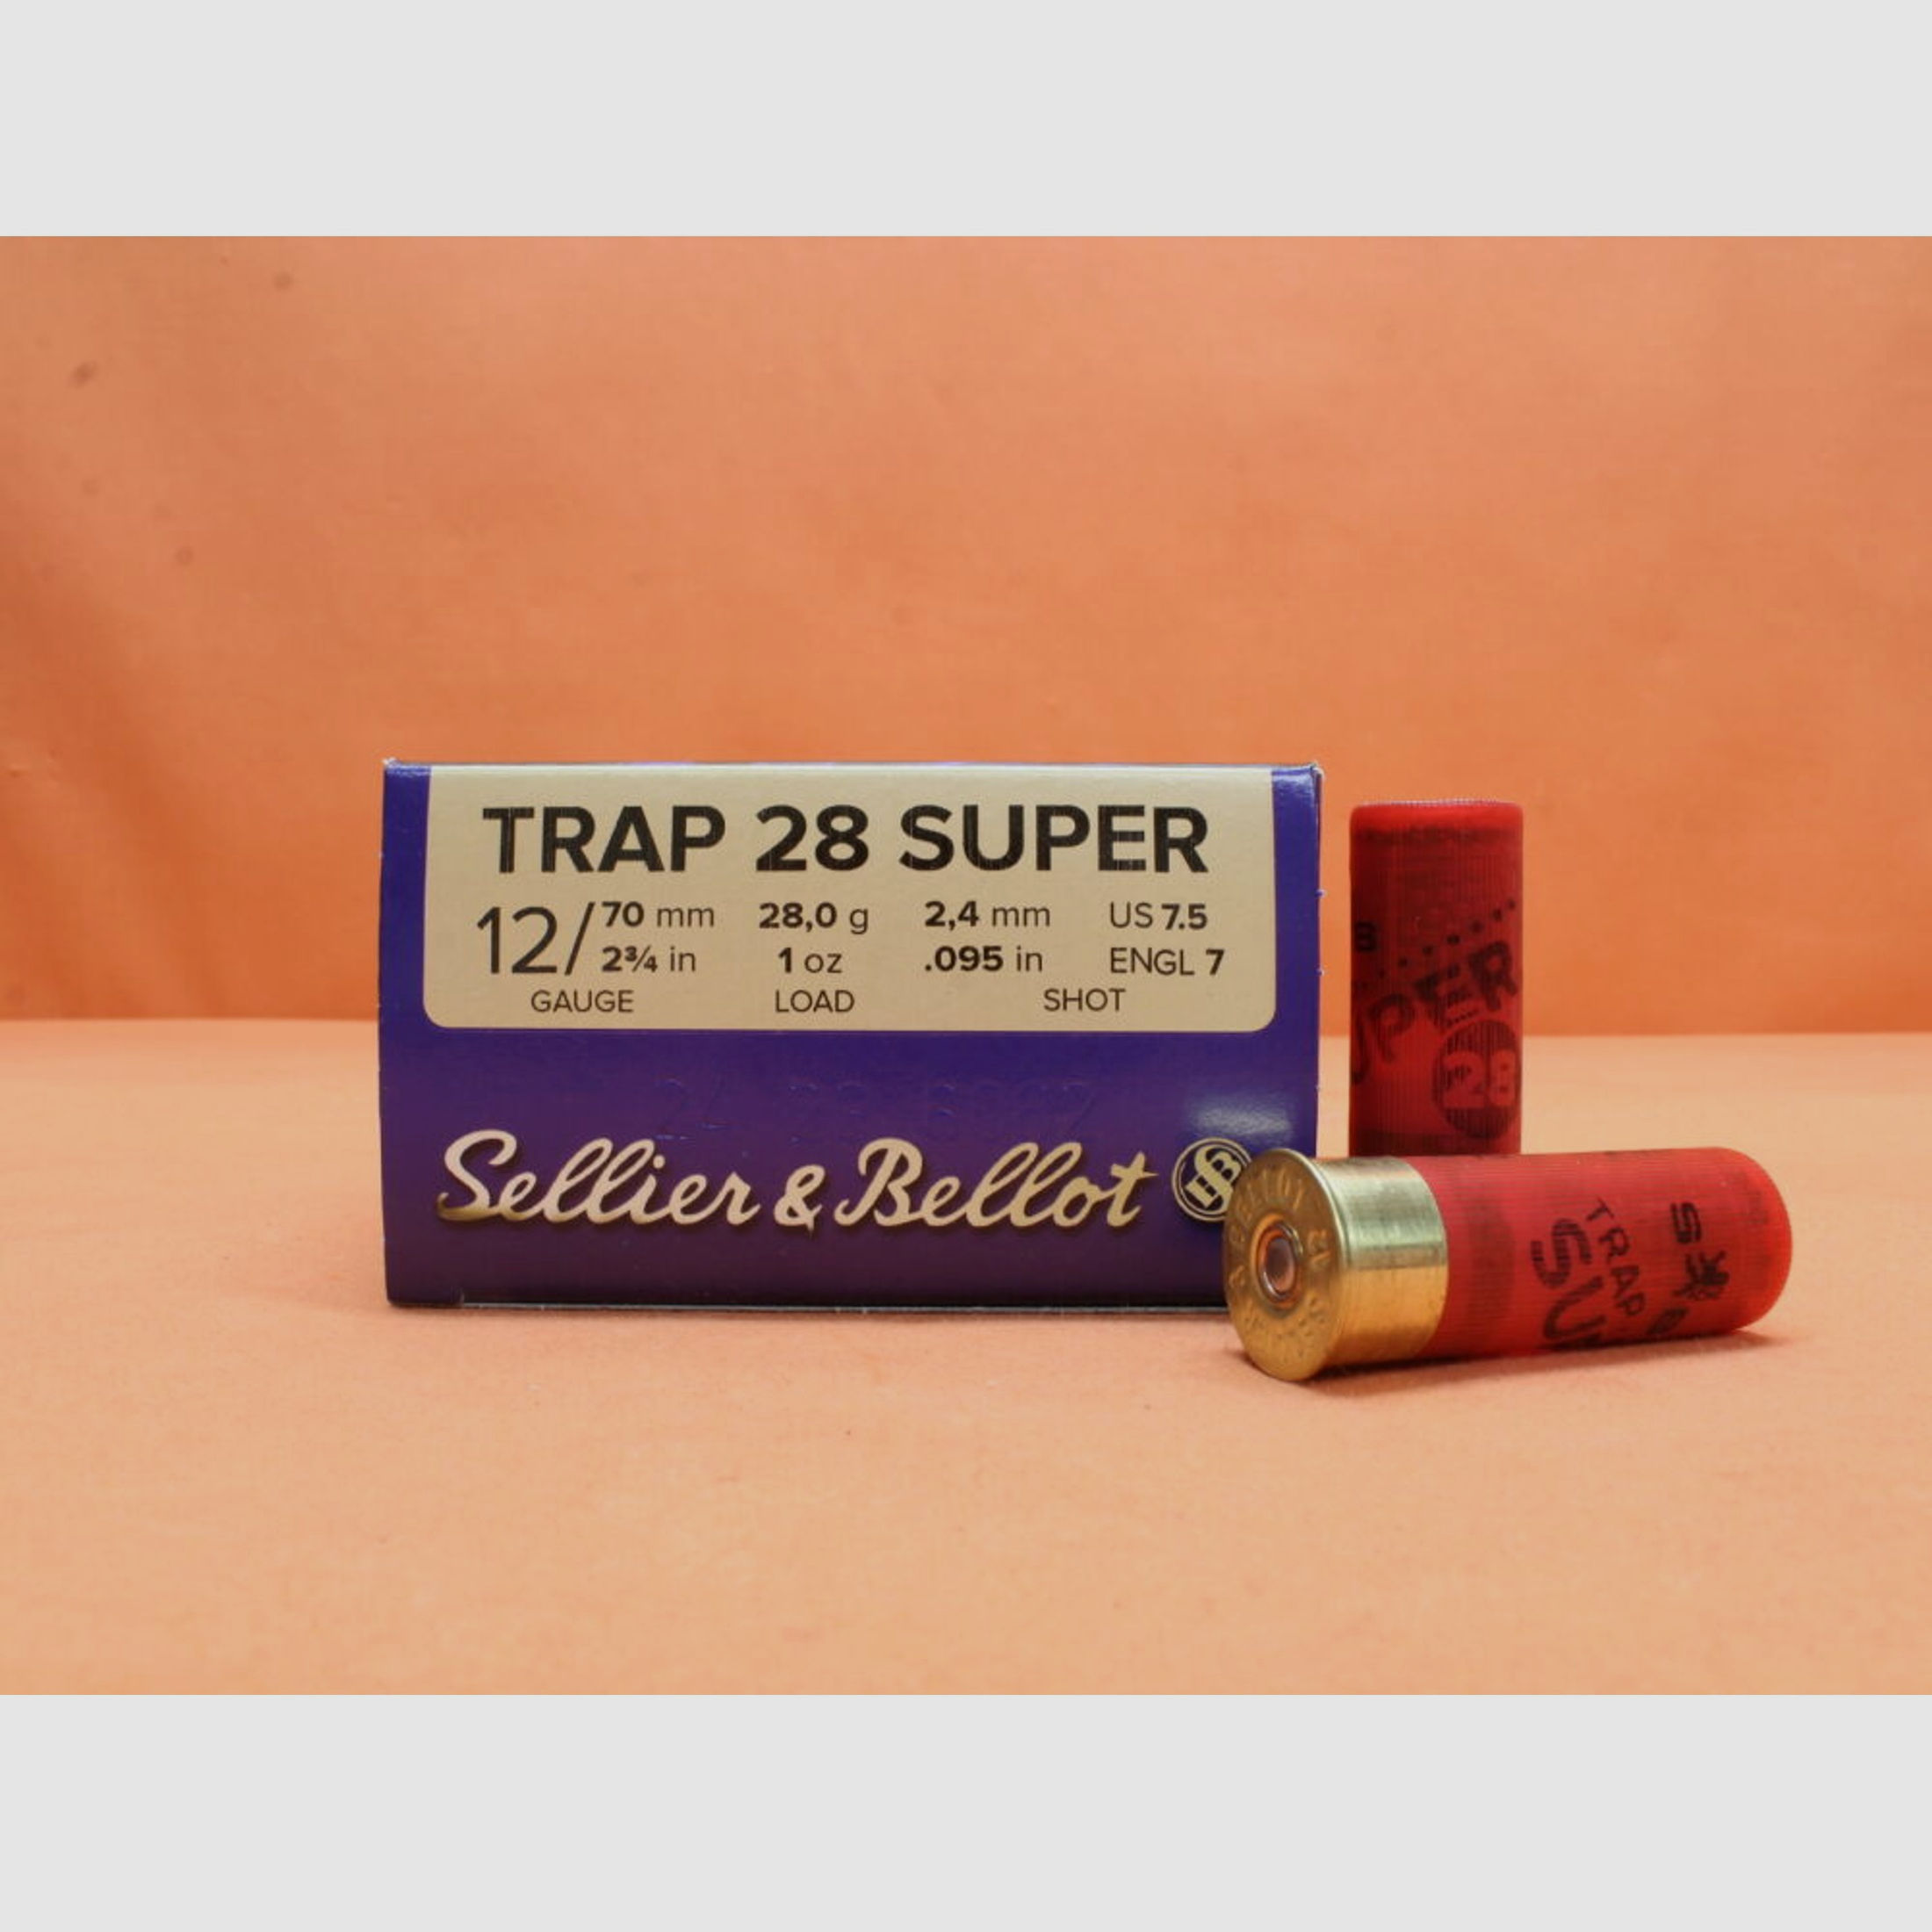 S&B Sellier & Bellot	 Patrone 12/70 S&B/ Sellier&Bellot 28g 2,4mm/ No.7,5  VE 25 Patronen (Super Trap 28)